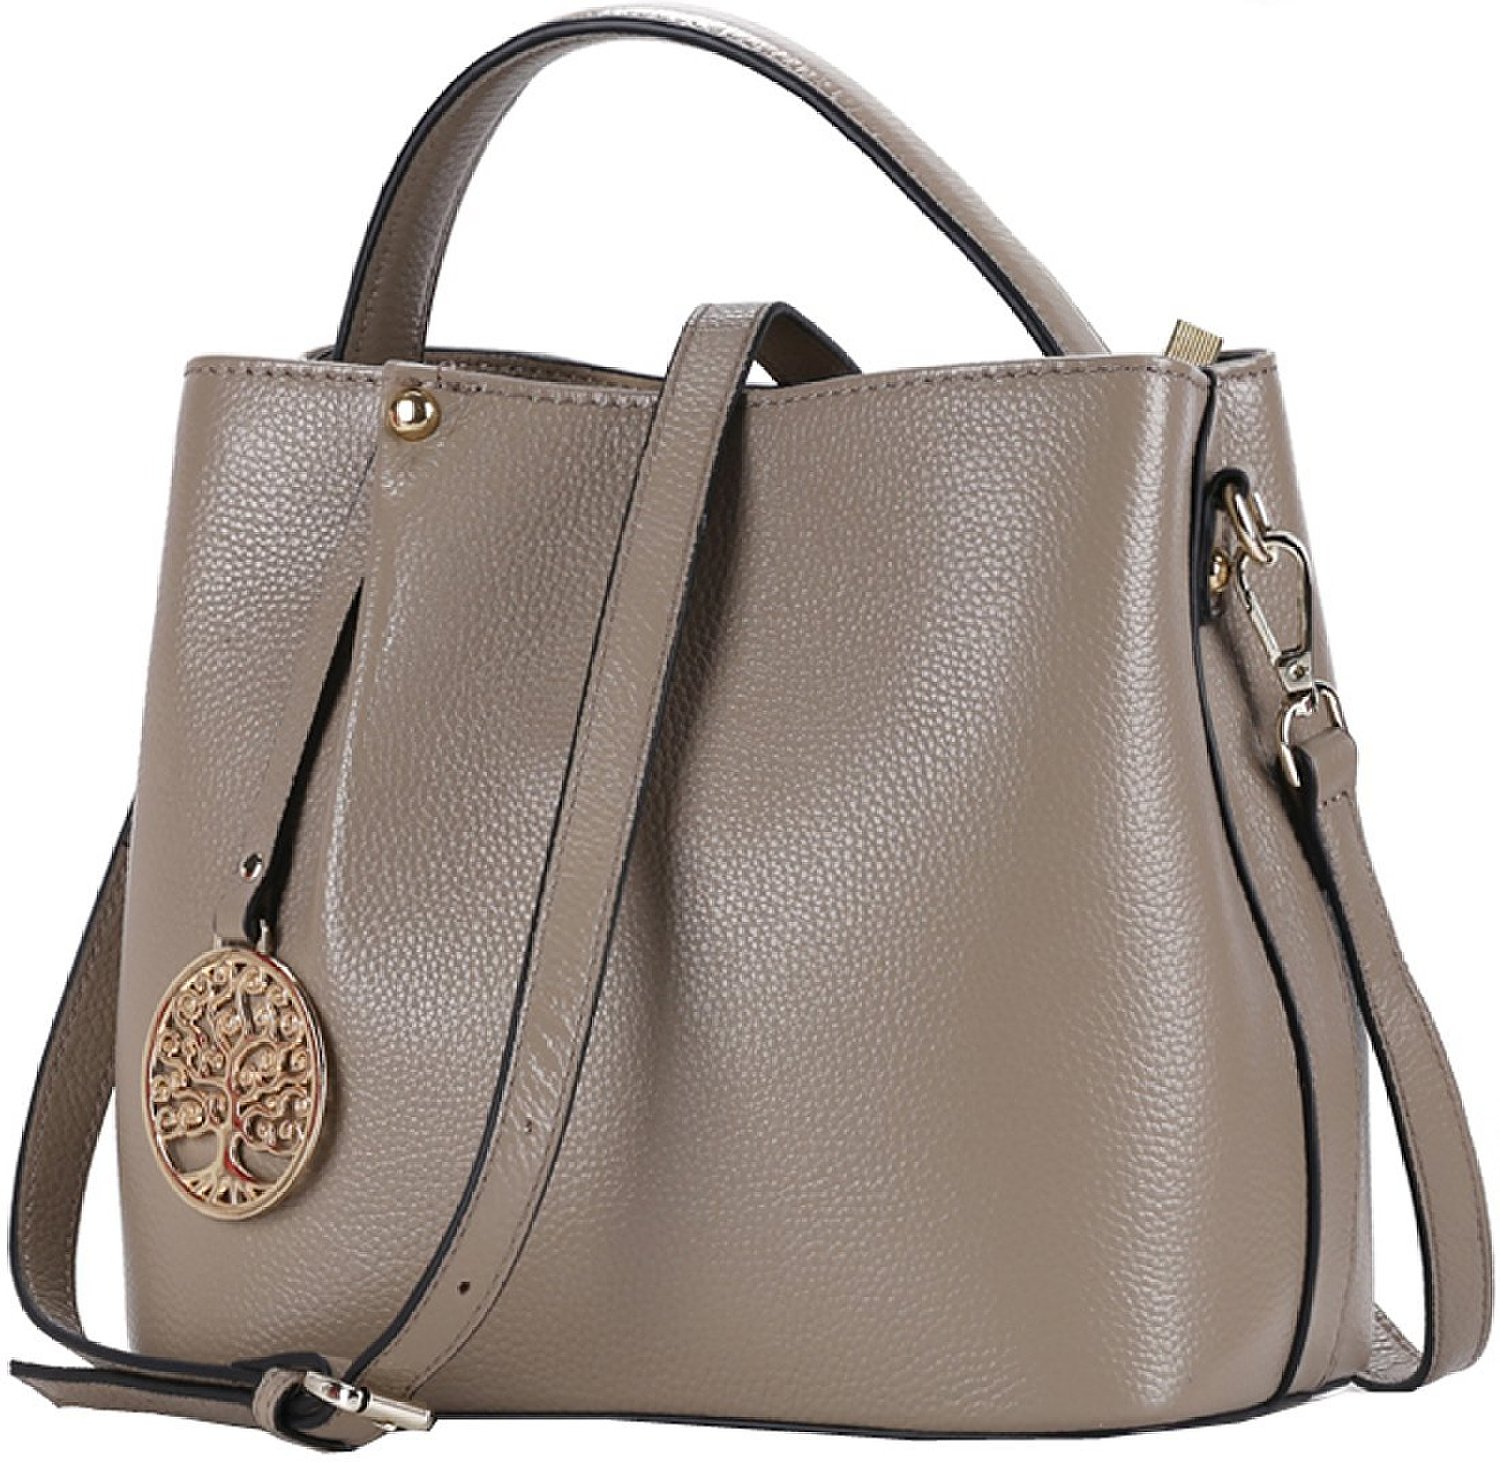 LIYUAN Women Handbags Fashion Handbags for Women Simple Shoulder Bags Messenger Tote Bags 